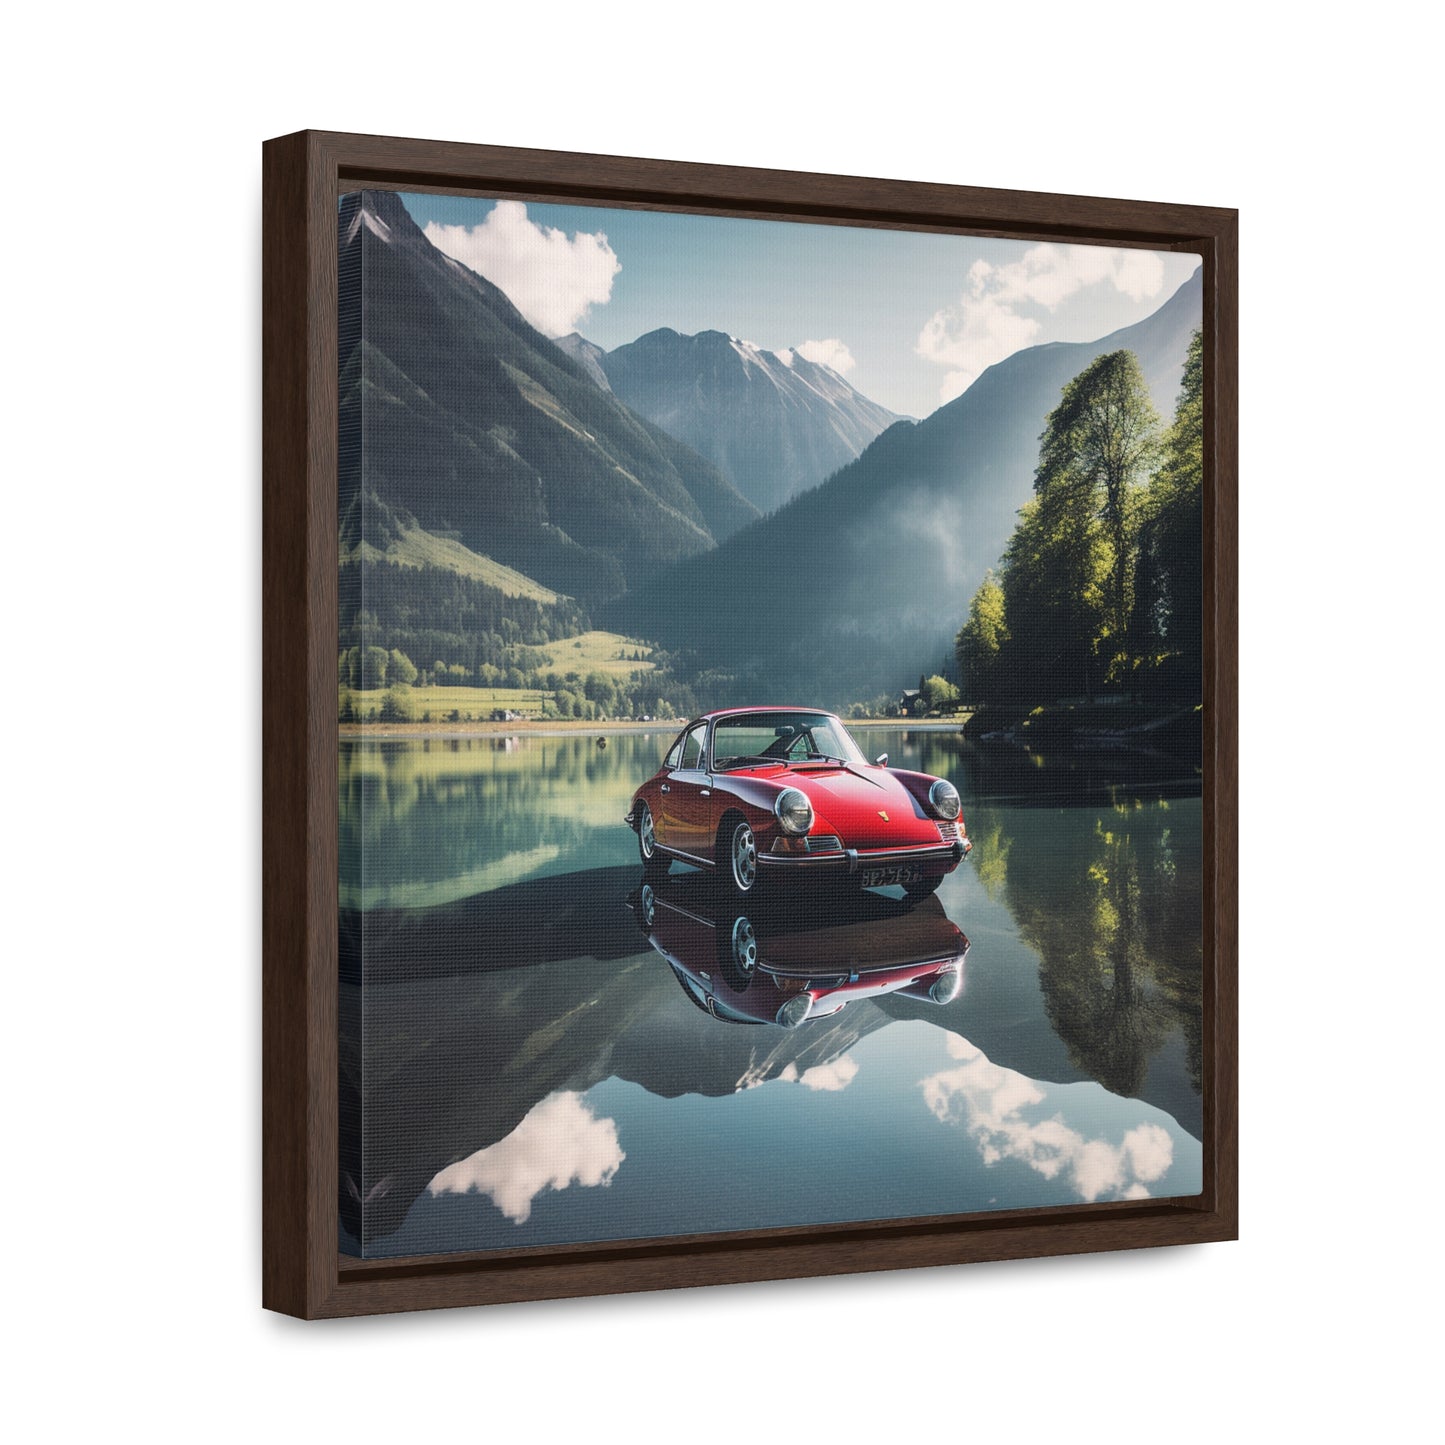 Gallery Canvas Wraps, Square Frame Porsche Lake 3